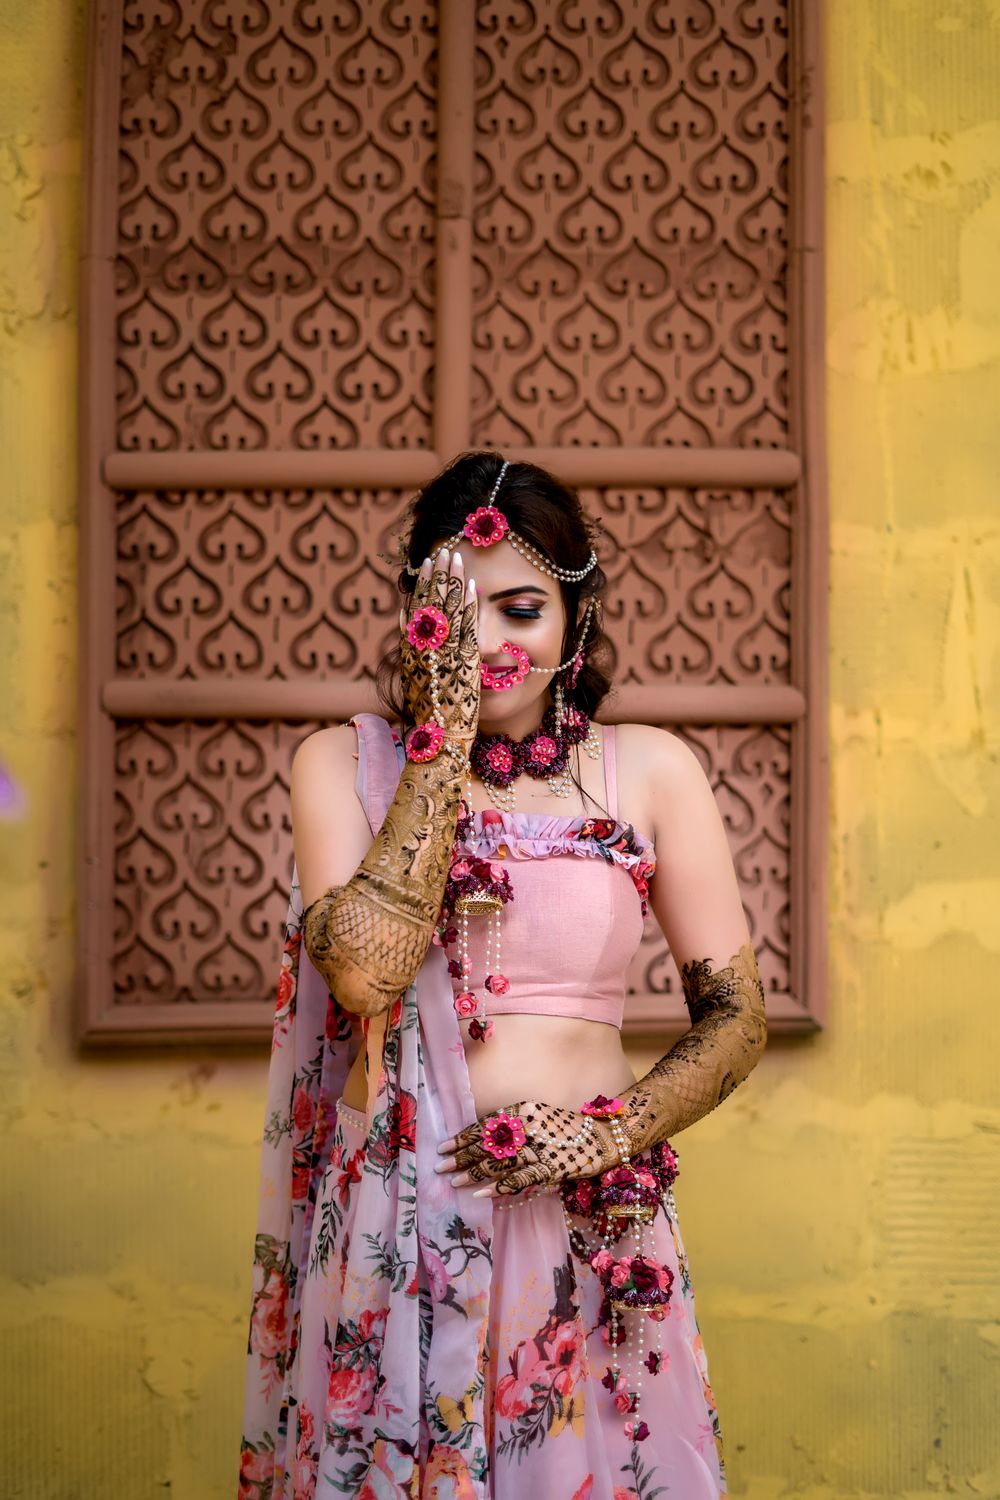 Photo From Bride - By Eshali Gaikwad Photography